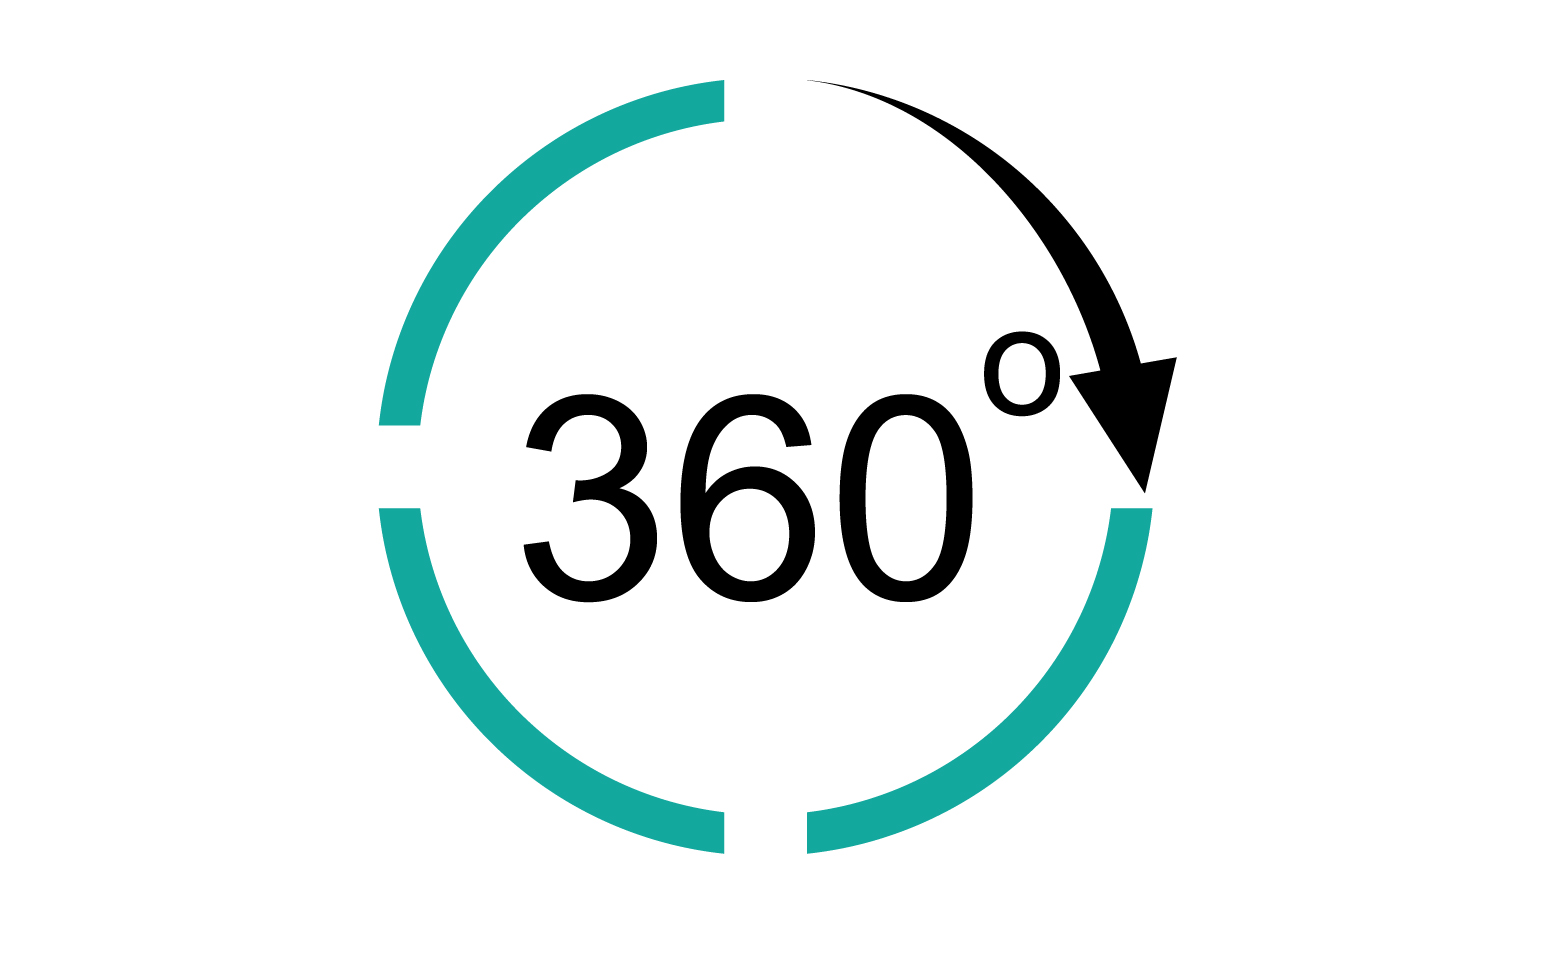 360 degree angle rotation icon symbol logo version v22